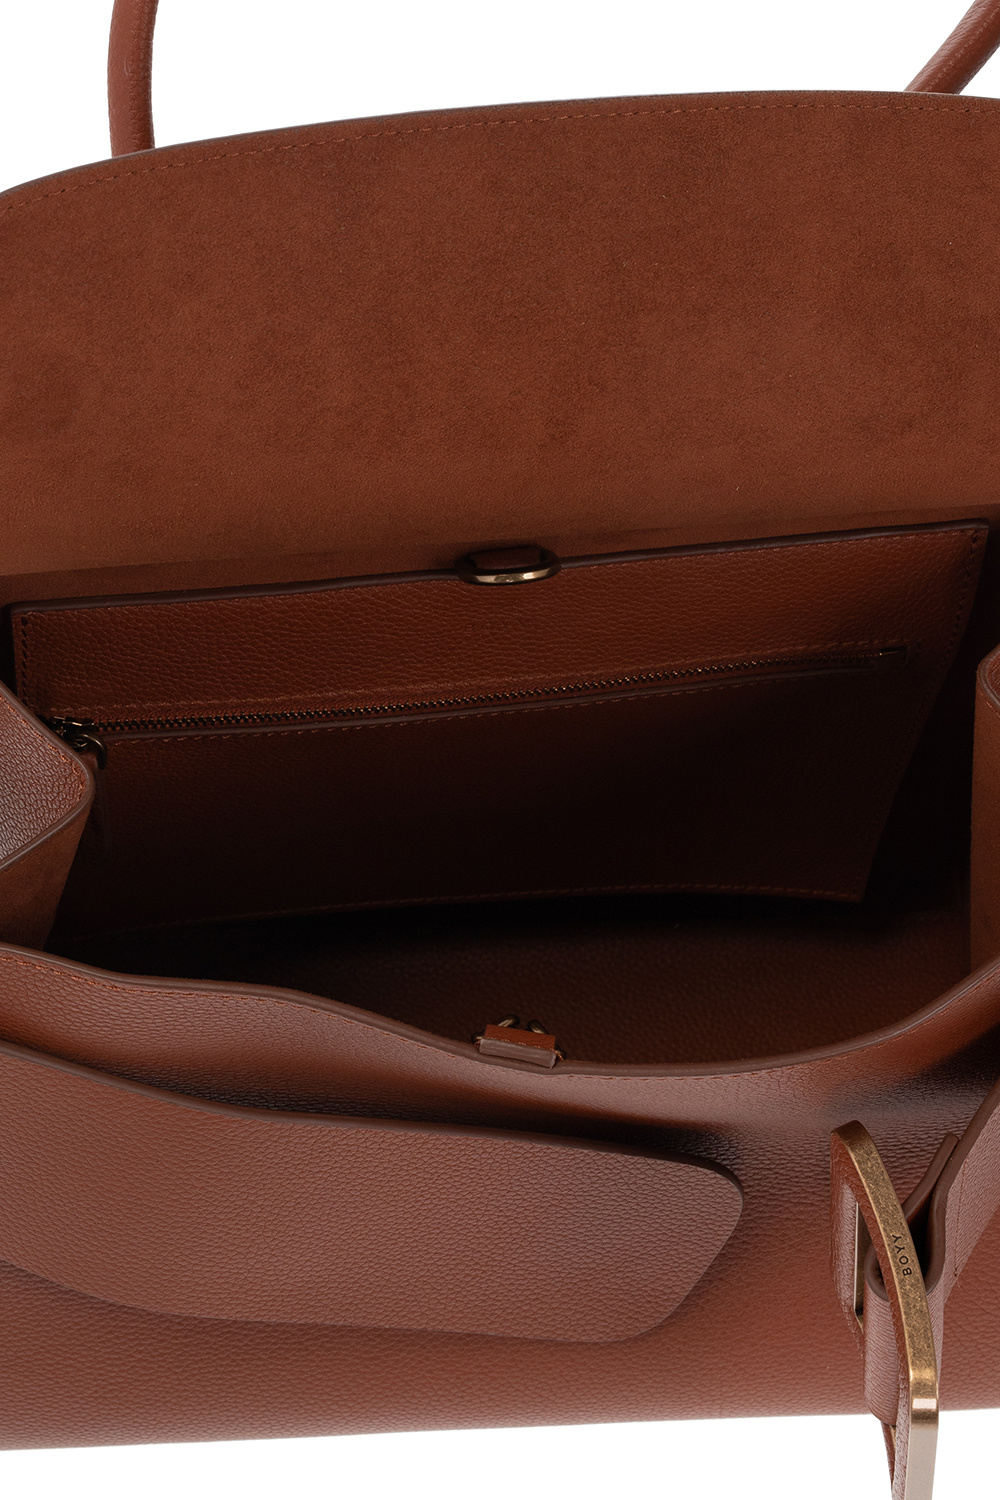 Leather handbag Boyy Camel in Leather - 34861261